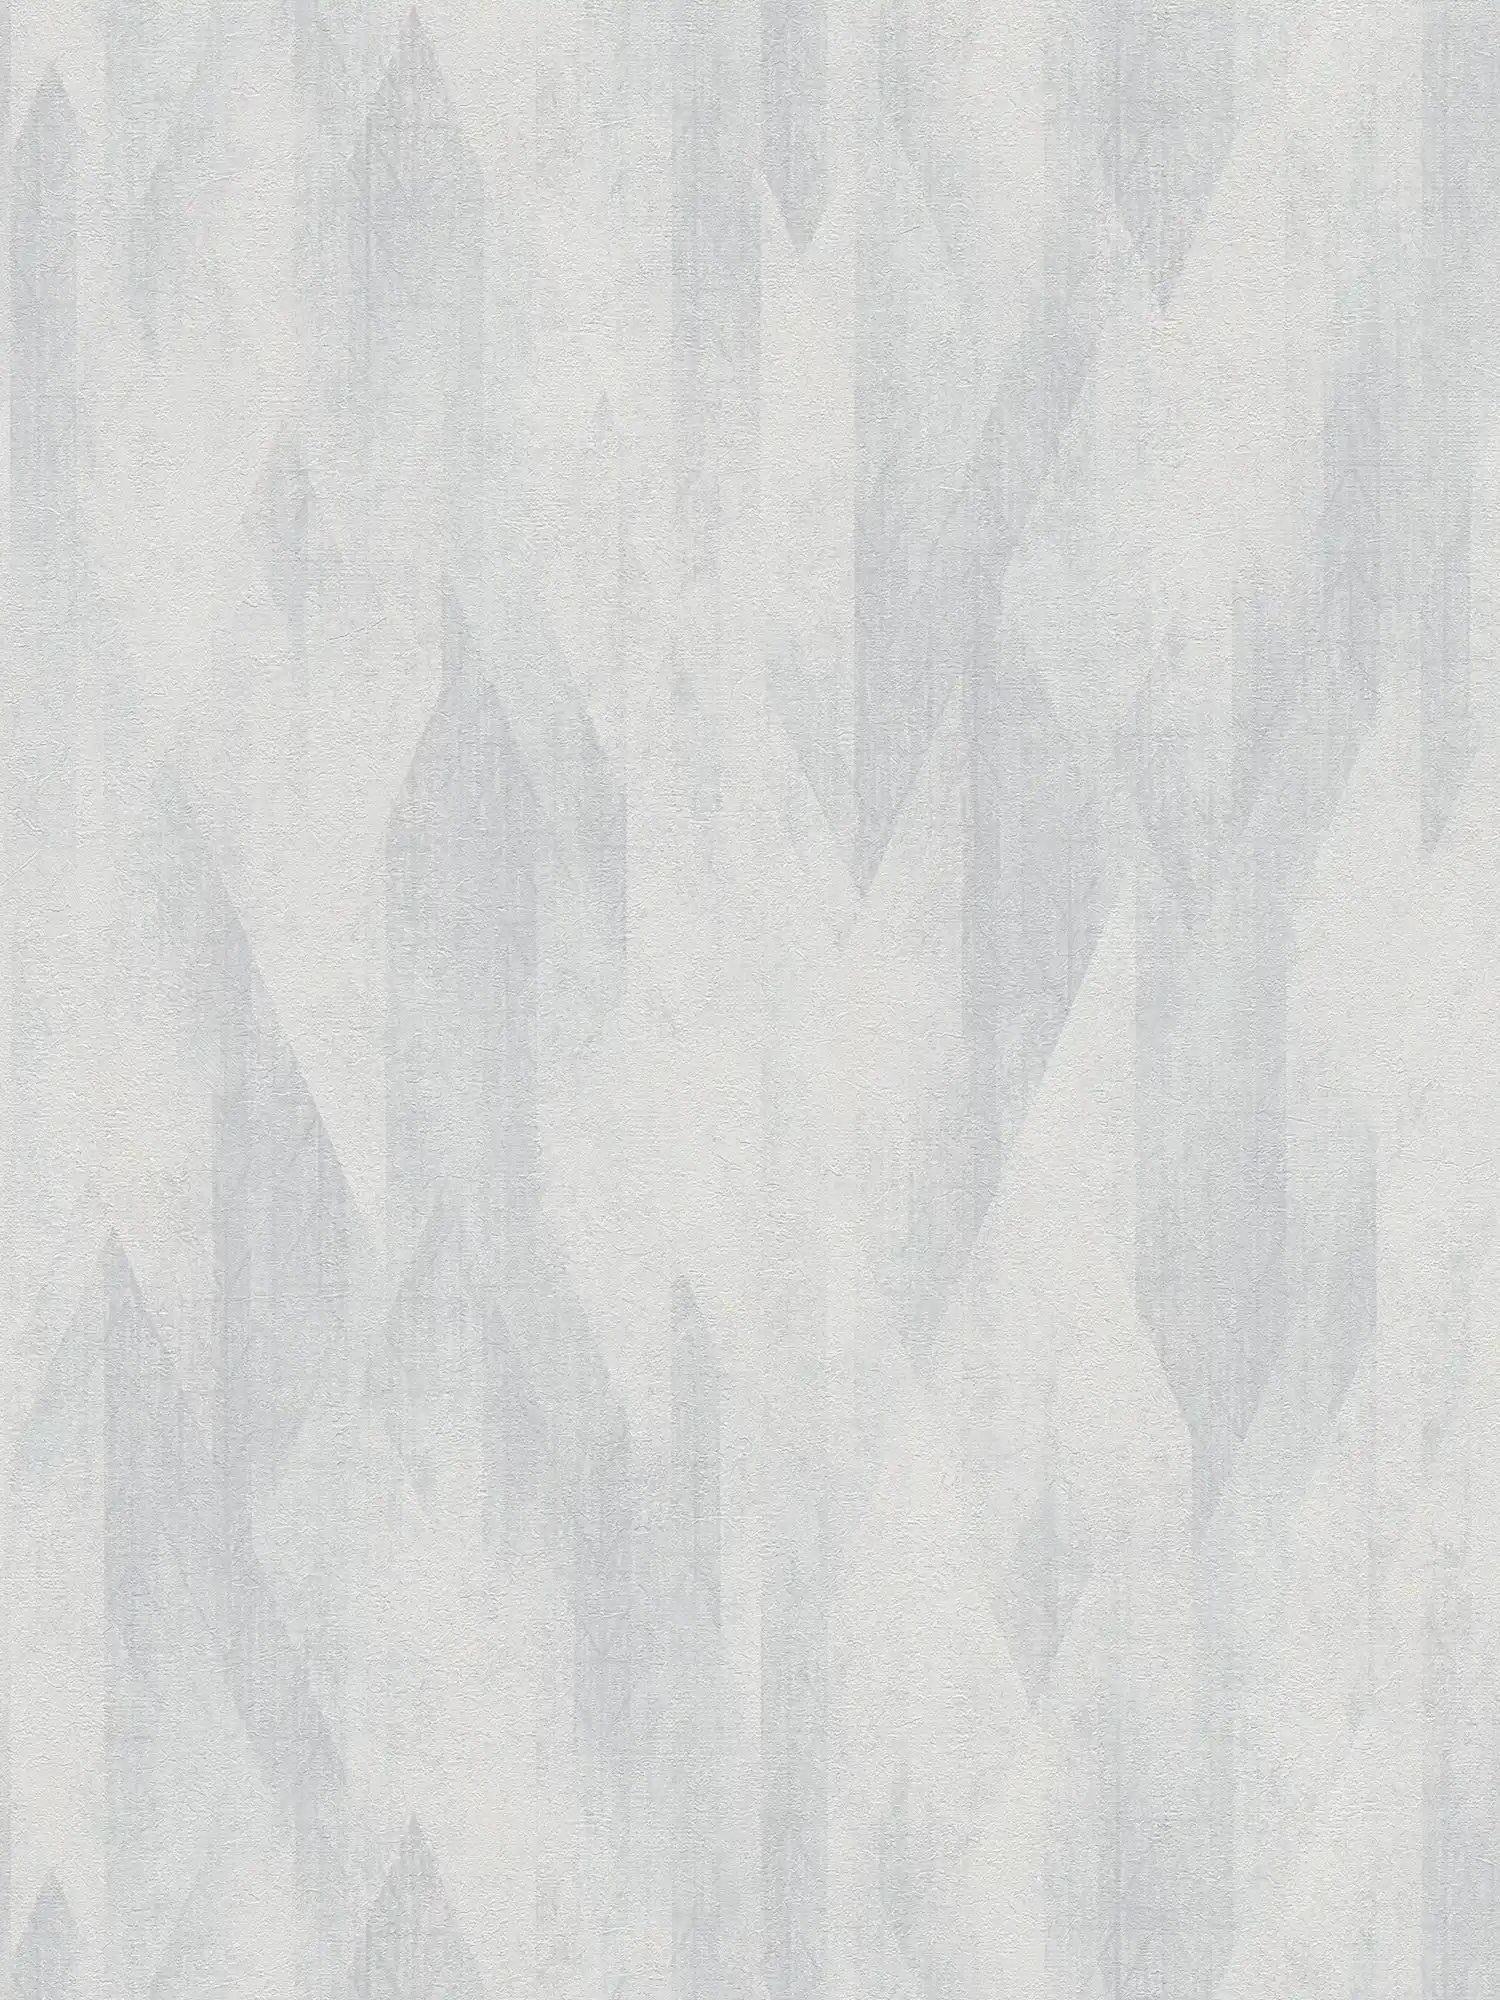 Graphic non-woven wallpaper with subtle diamond pattern - grey, white
